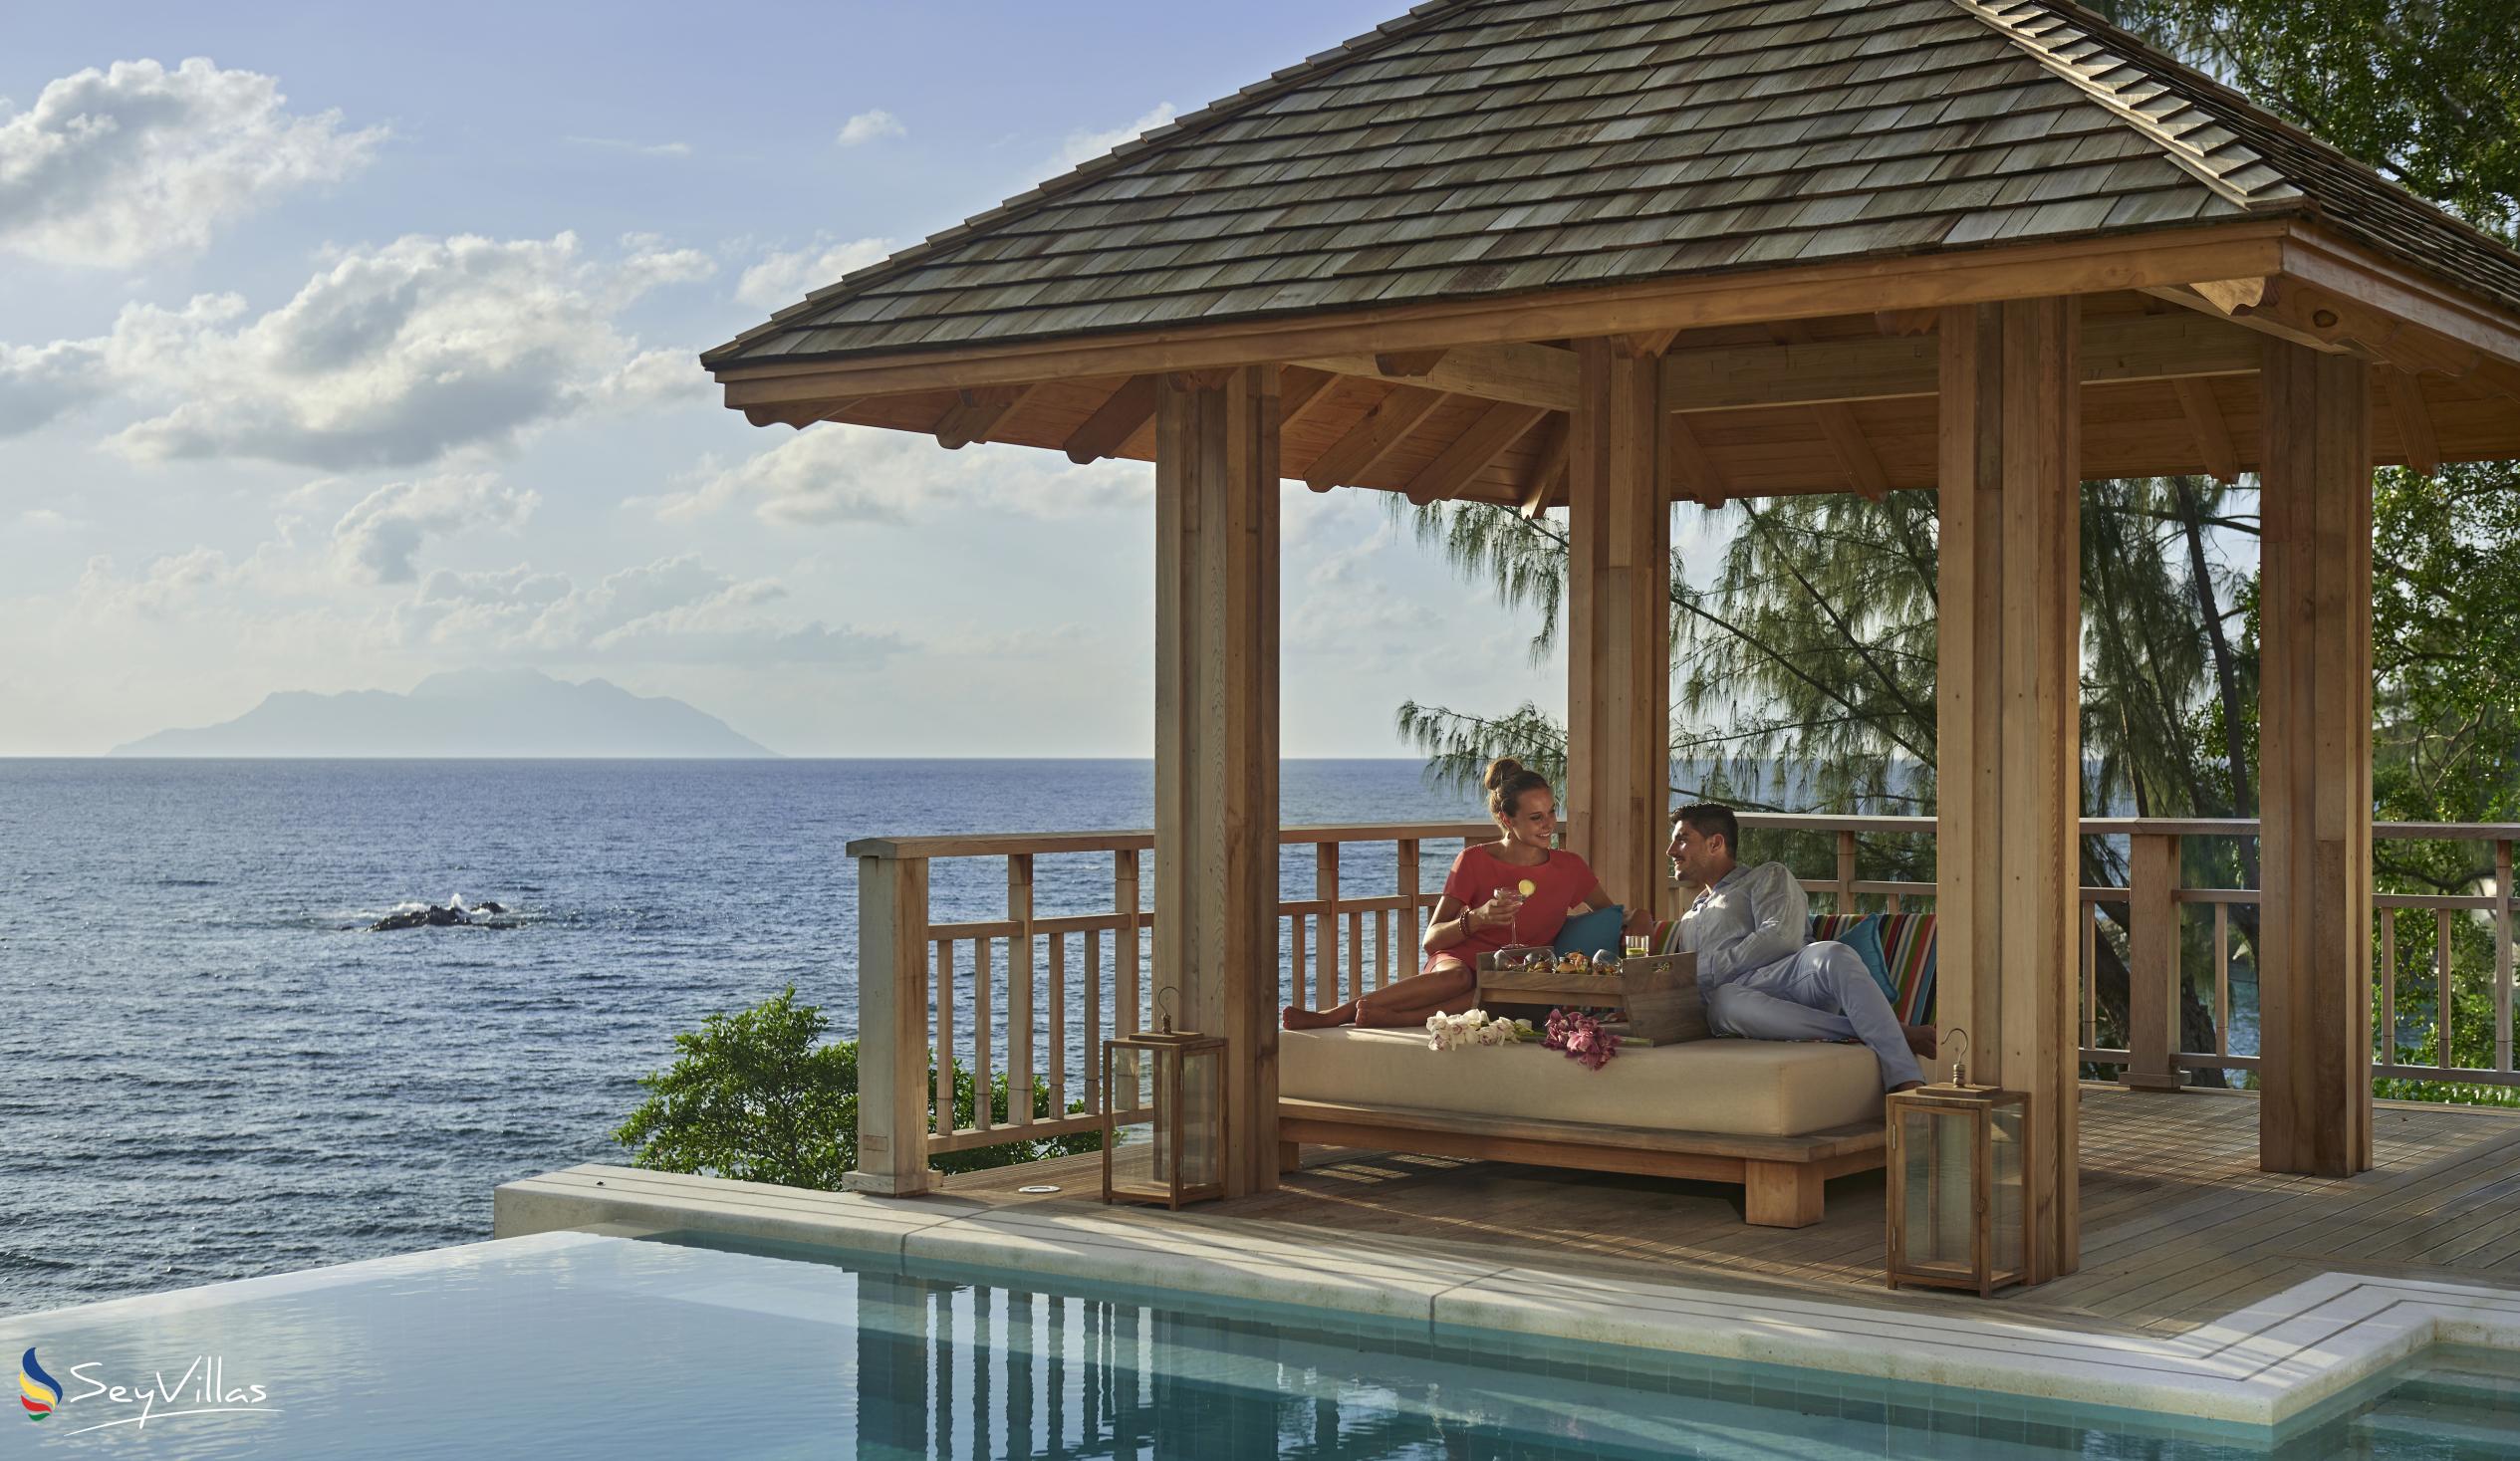 Photo 101: Hilton Seychelles Northolme Resort & Spa - Outdoor area - Mahé (Seychelles)